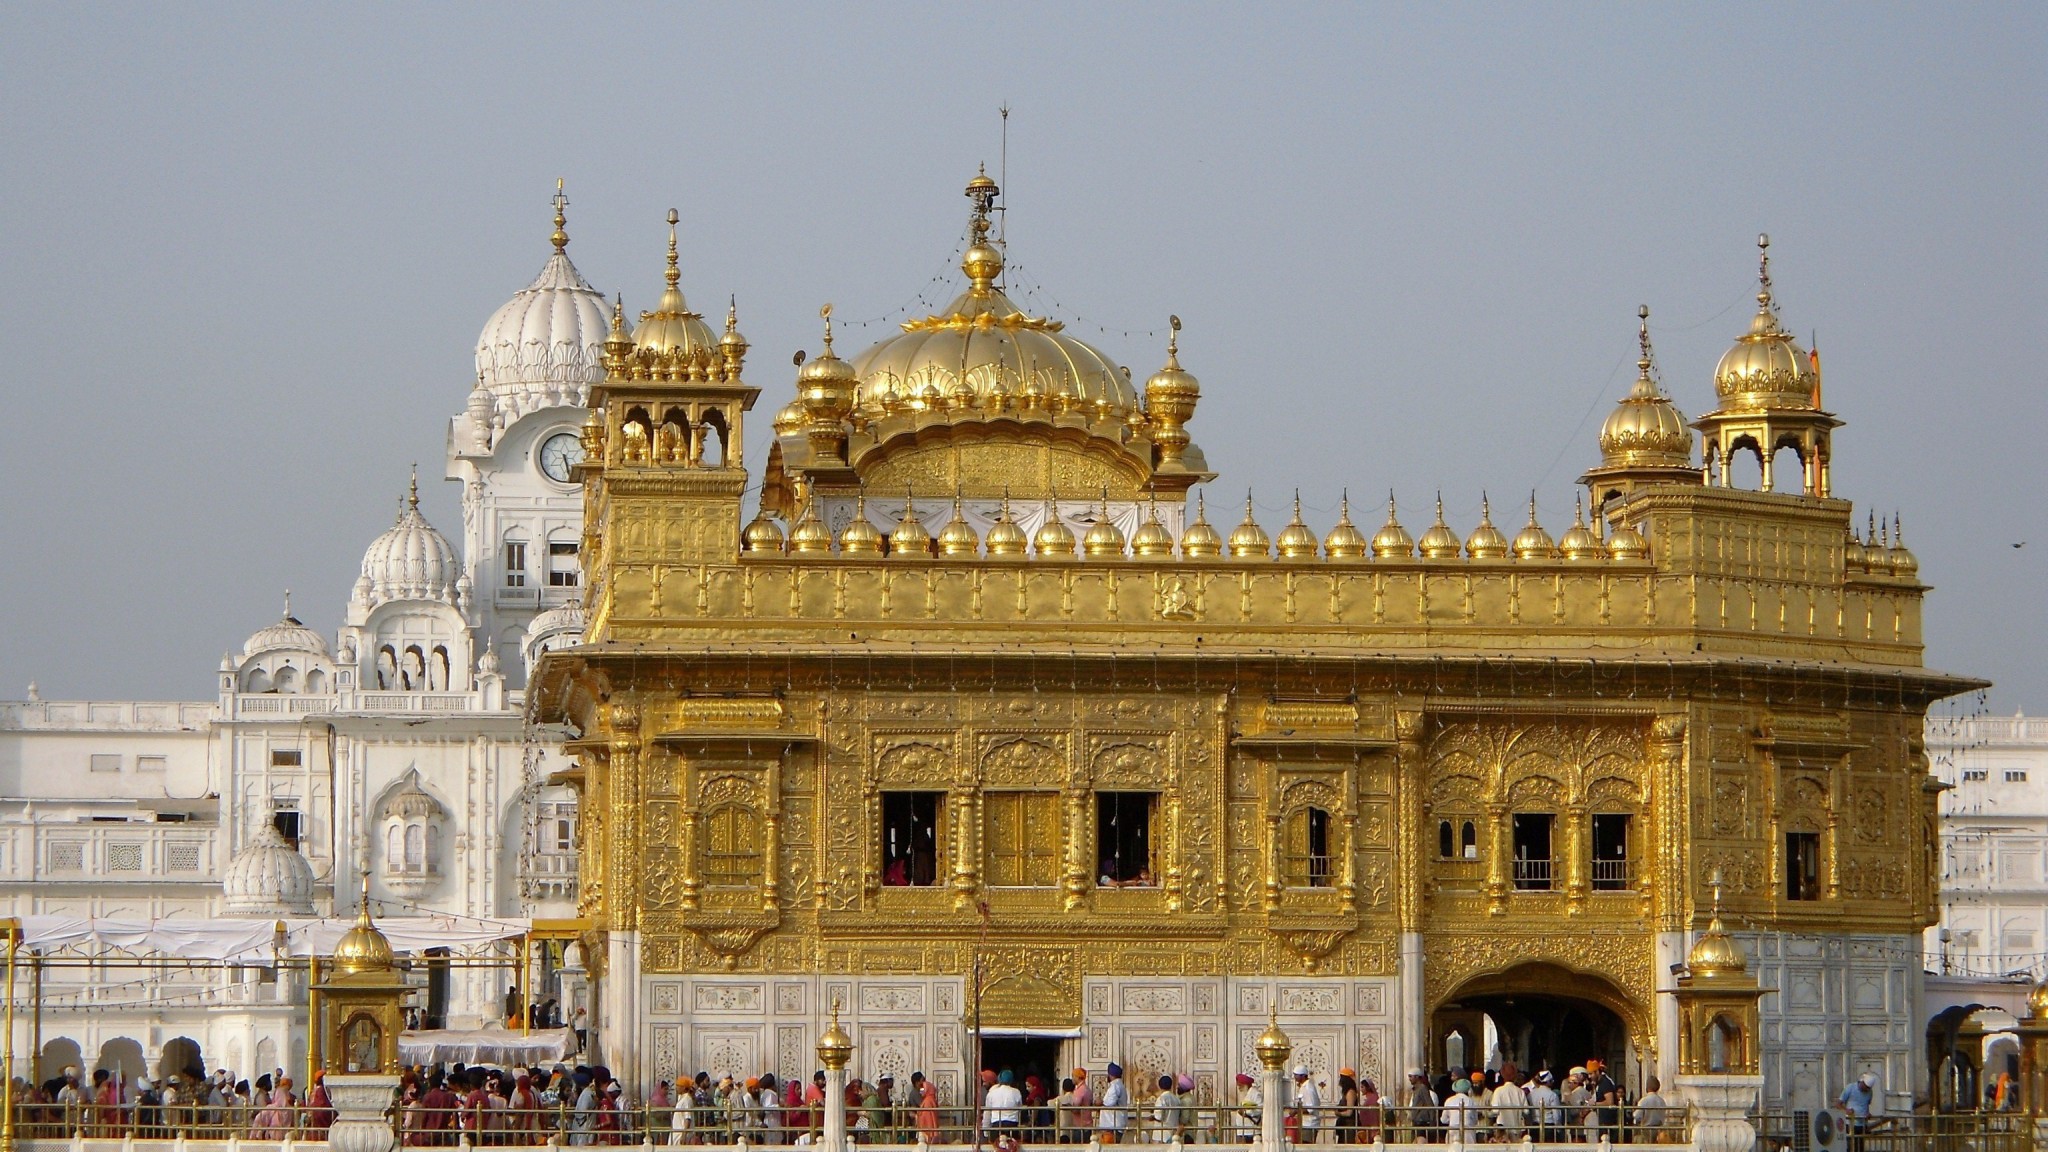 Sikh Gurdwara Golden Temple - Golden Temple - 2048x1152 Wallpaper -  